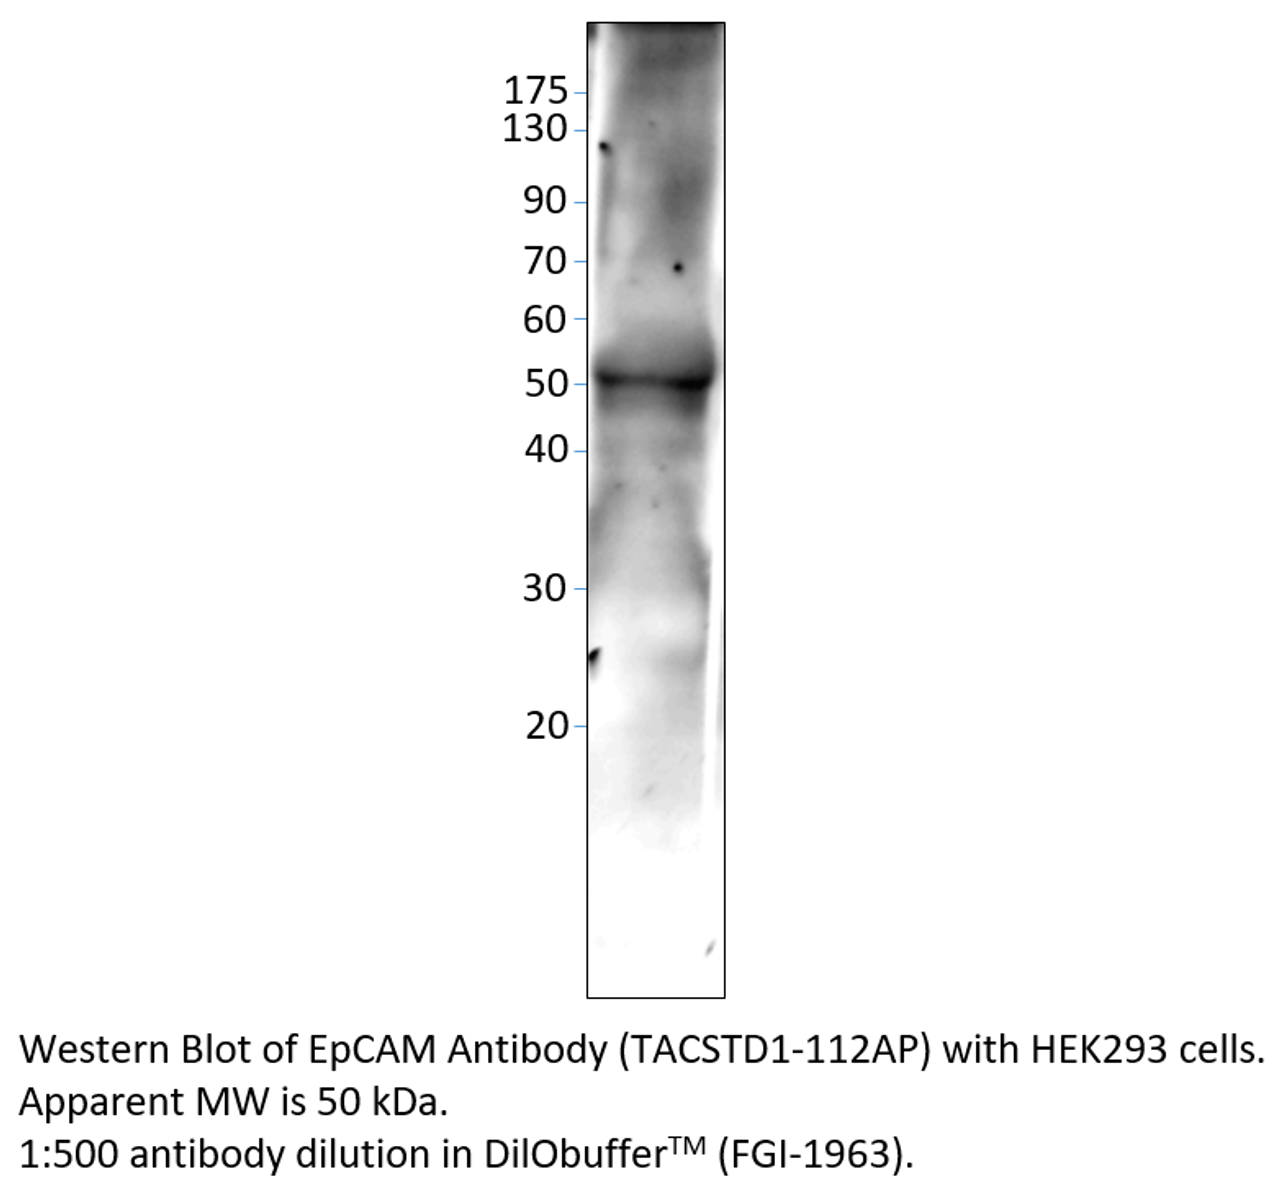 EpCAM Antibody from Fabgennix